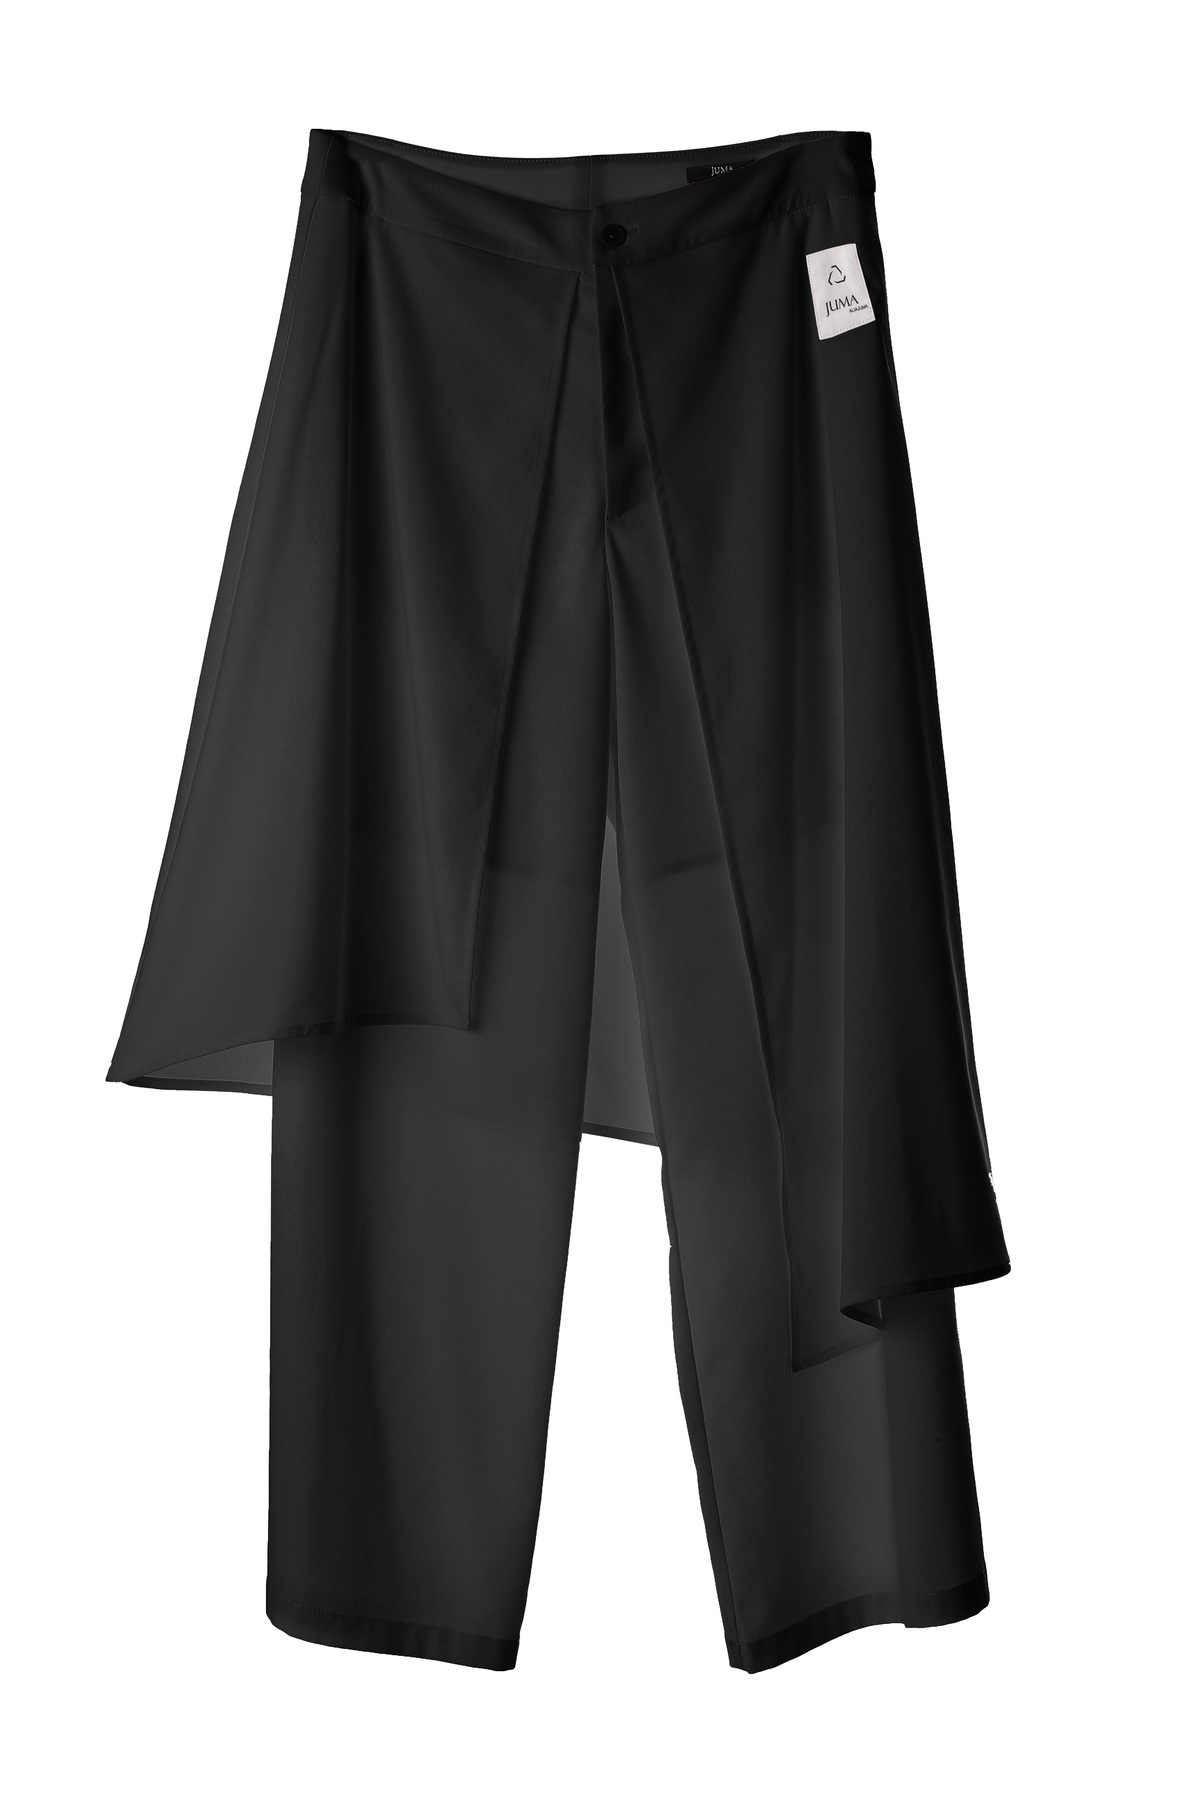 JUMA 裹身式前裤 - 10 个再生水瓶 - 黑色｜JUMA Wrap Front Pant - 10 Recycled Water Bottles - Black